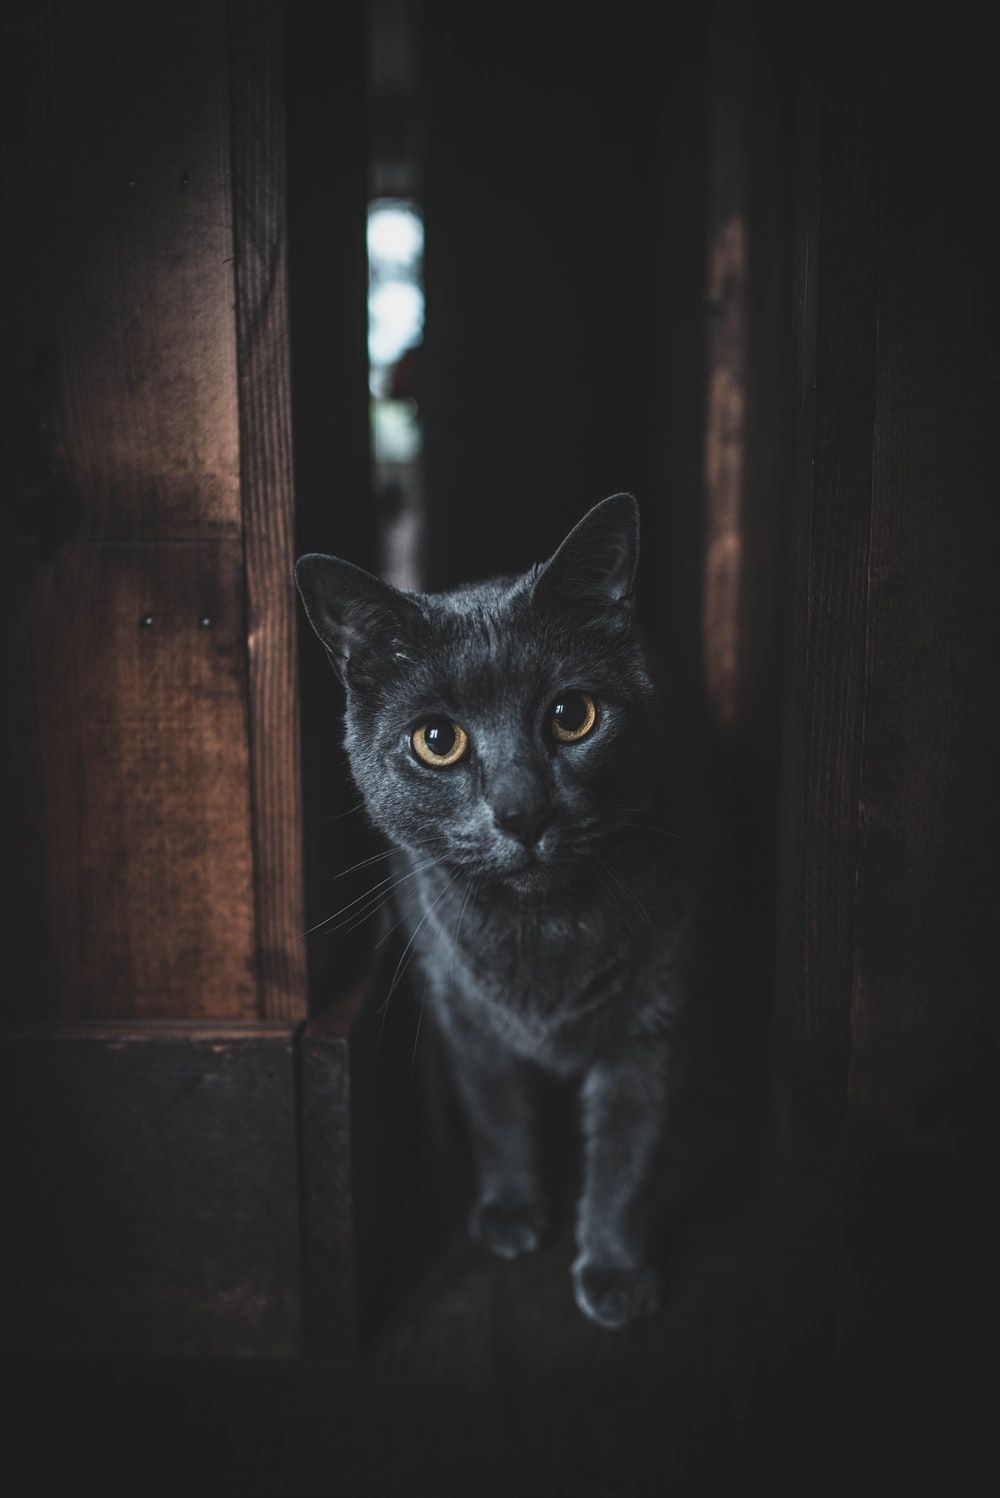 Dark Cat Picture. Download Free Image